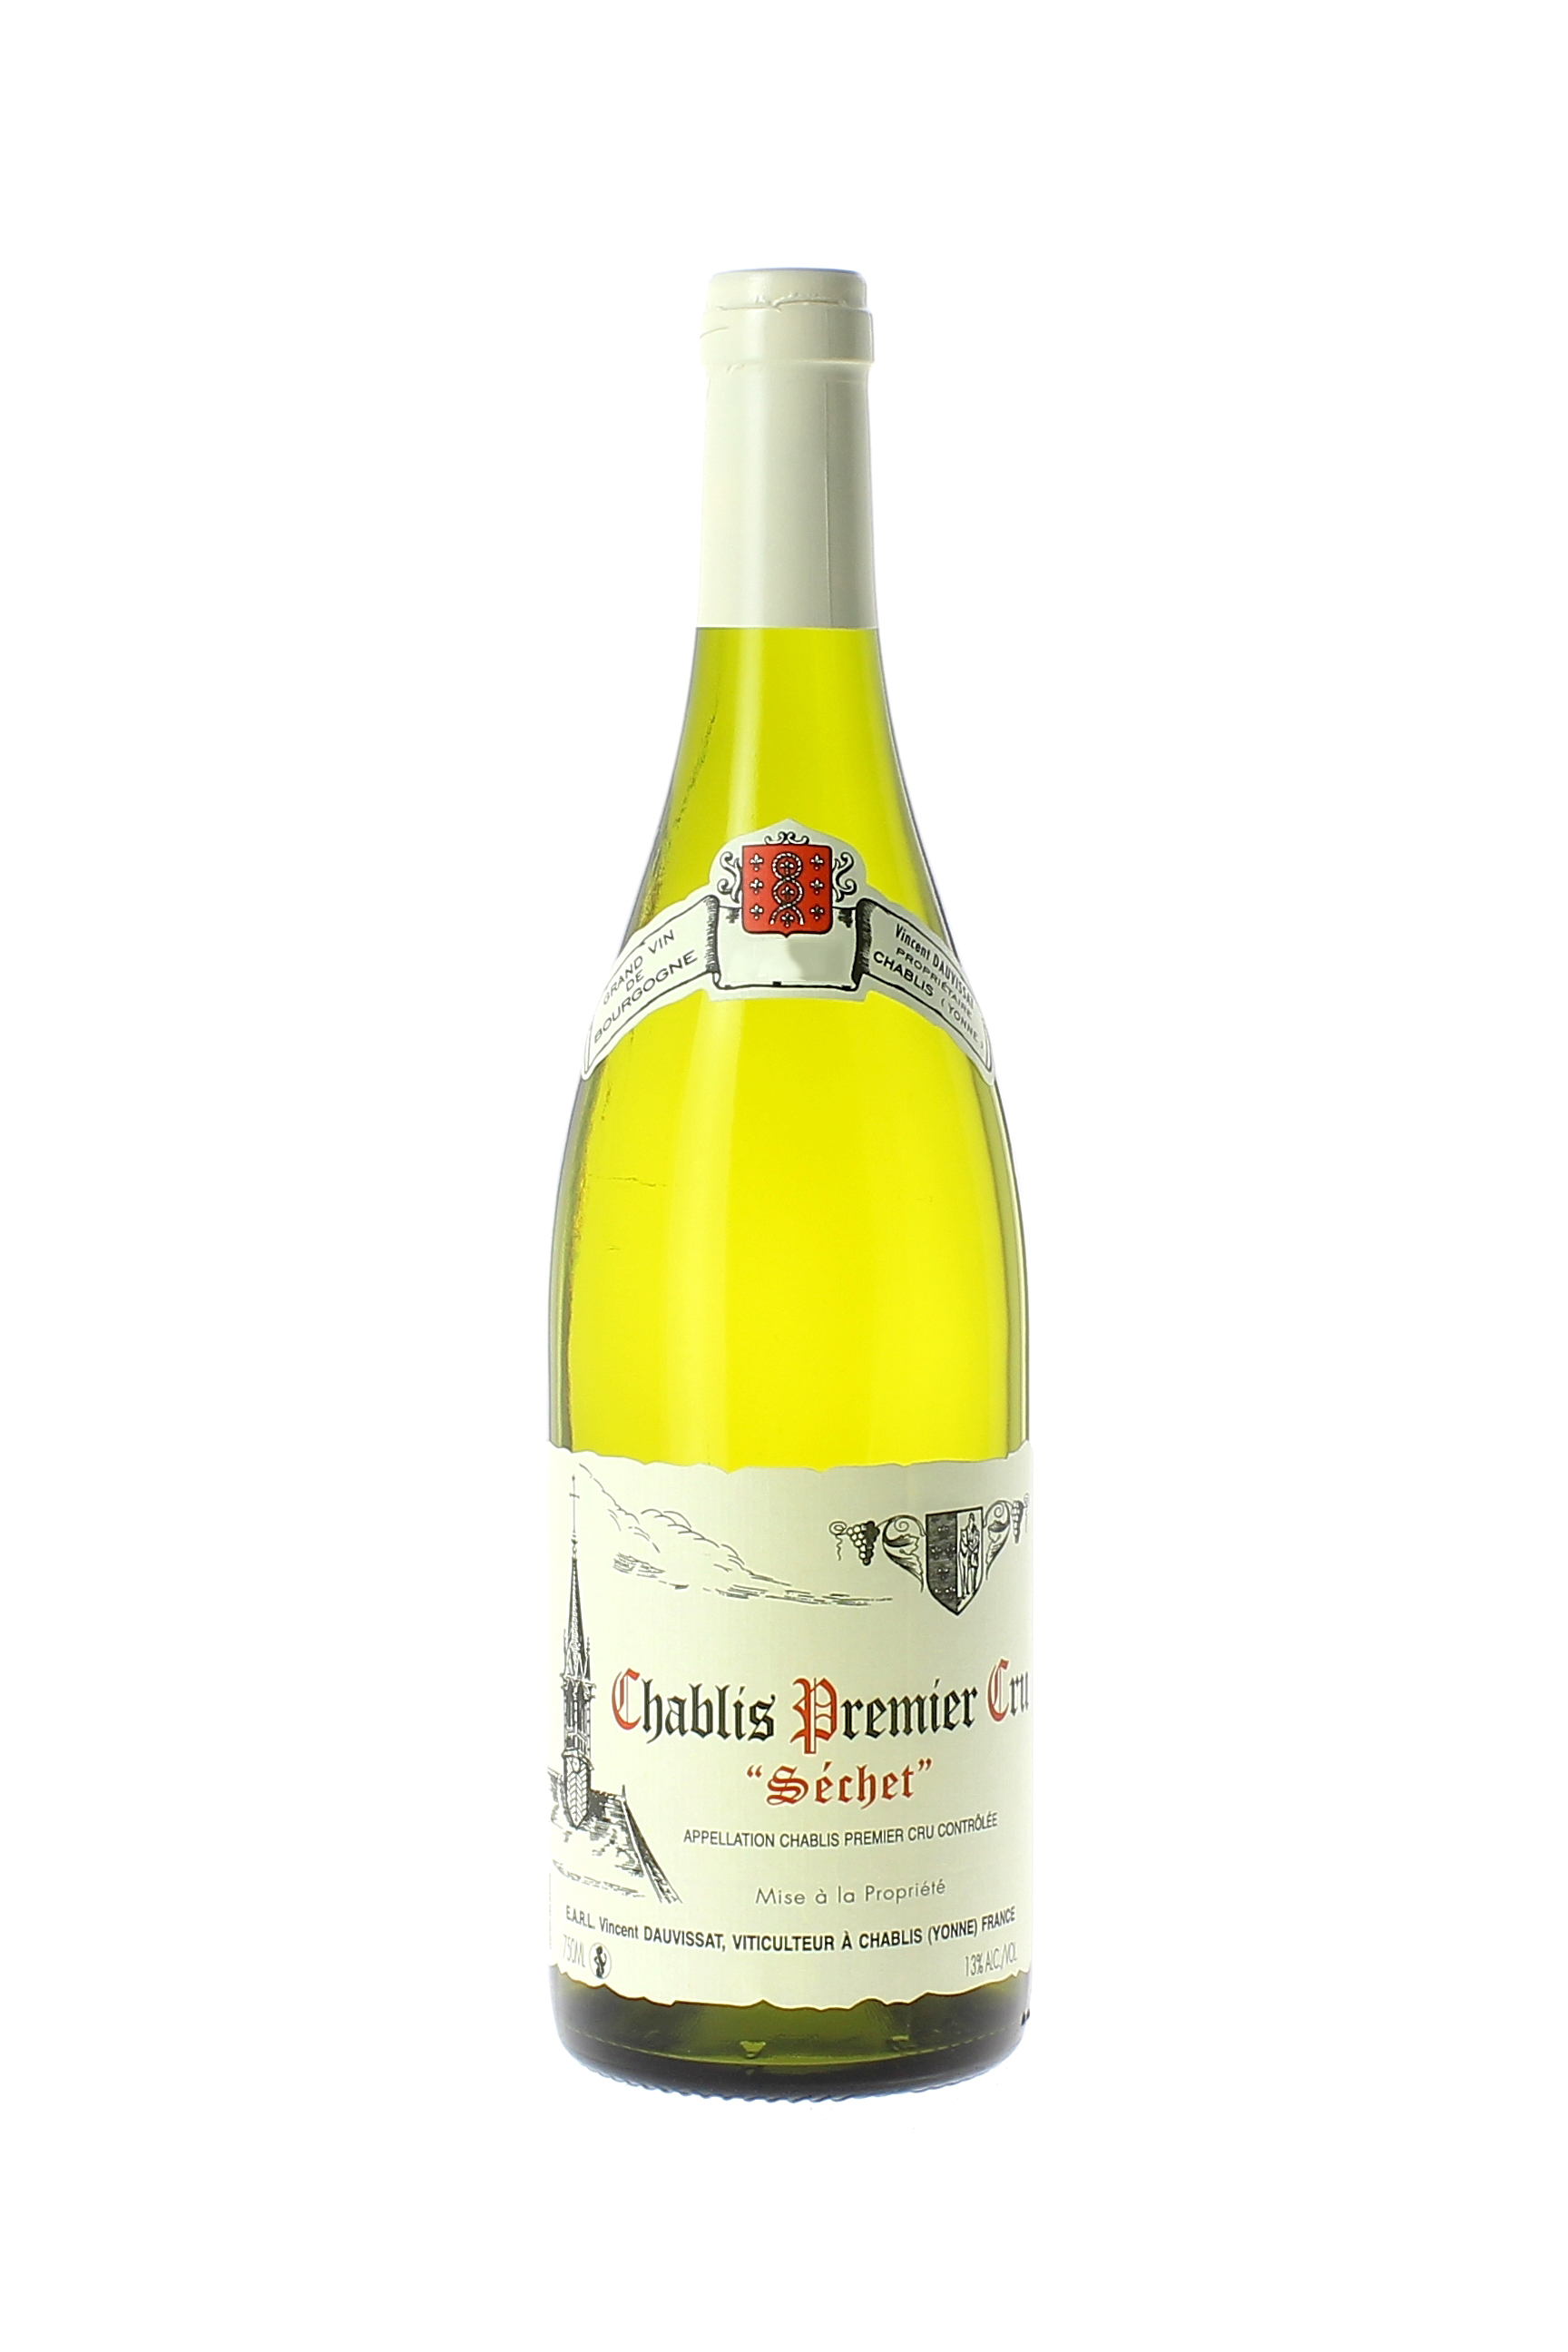 Chablis 1er cru les sechets 2015 Domaine DAUVISSAT, Bourgogne blanc